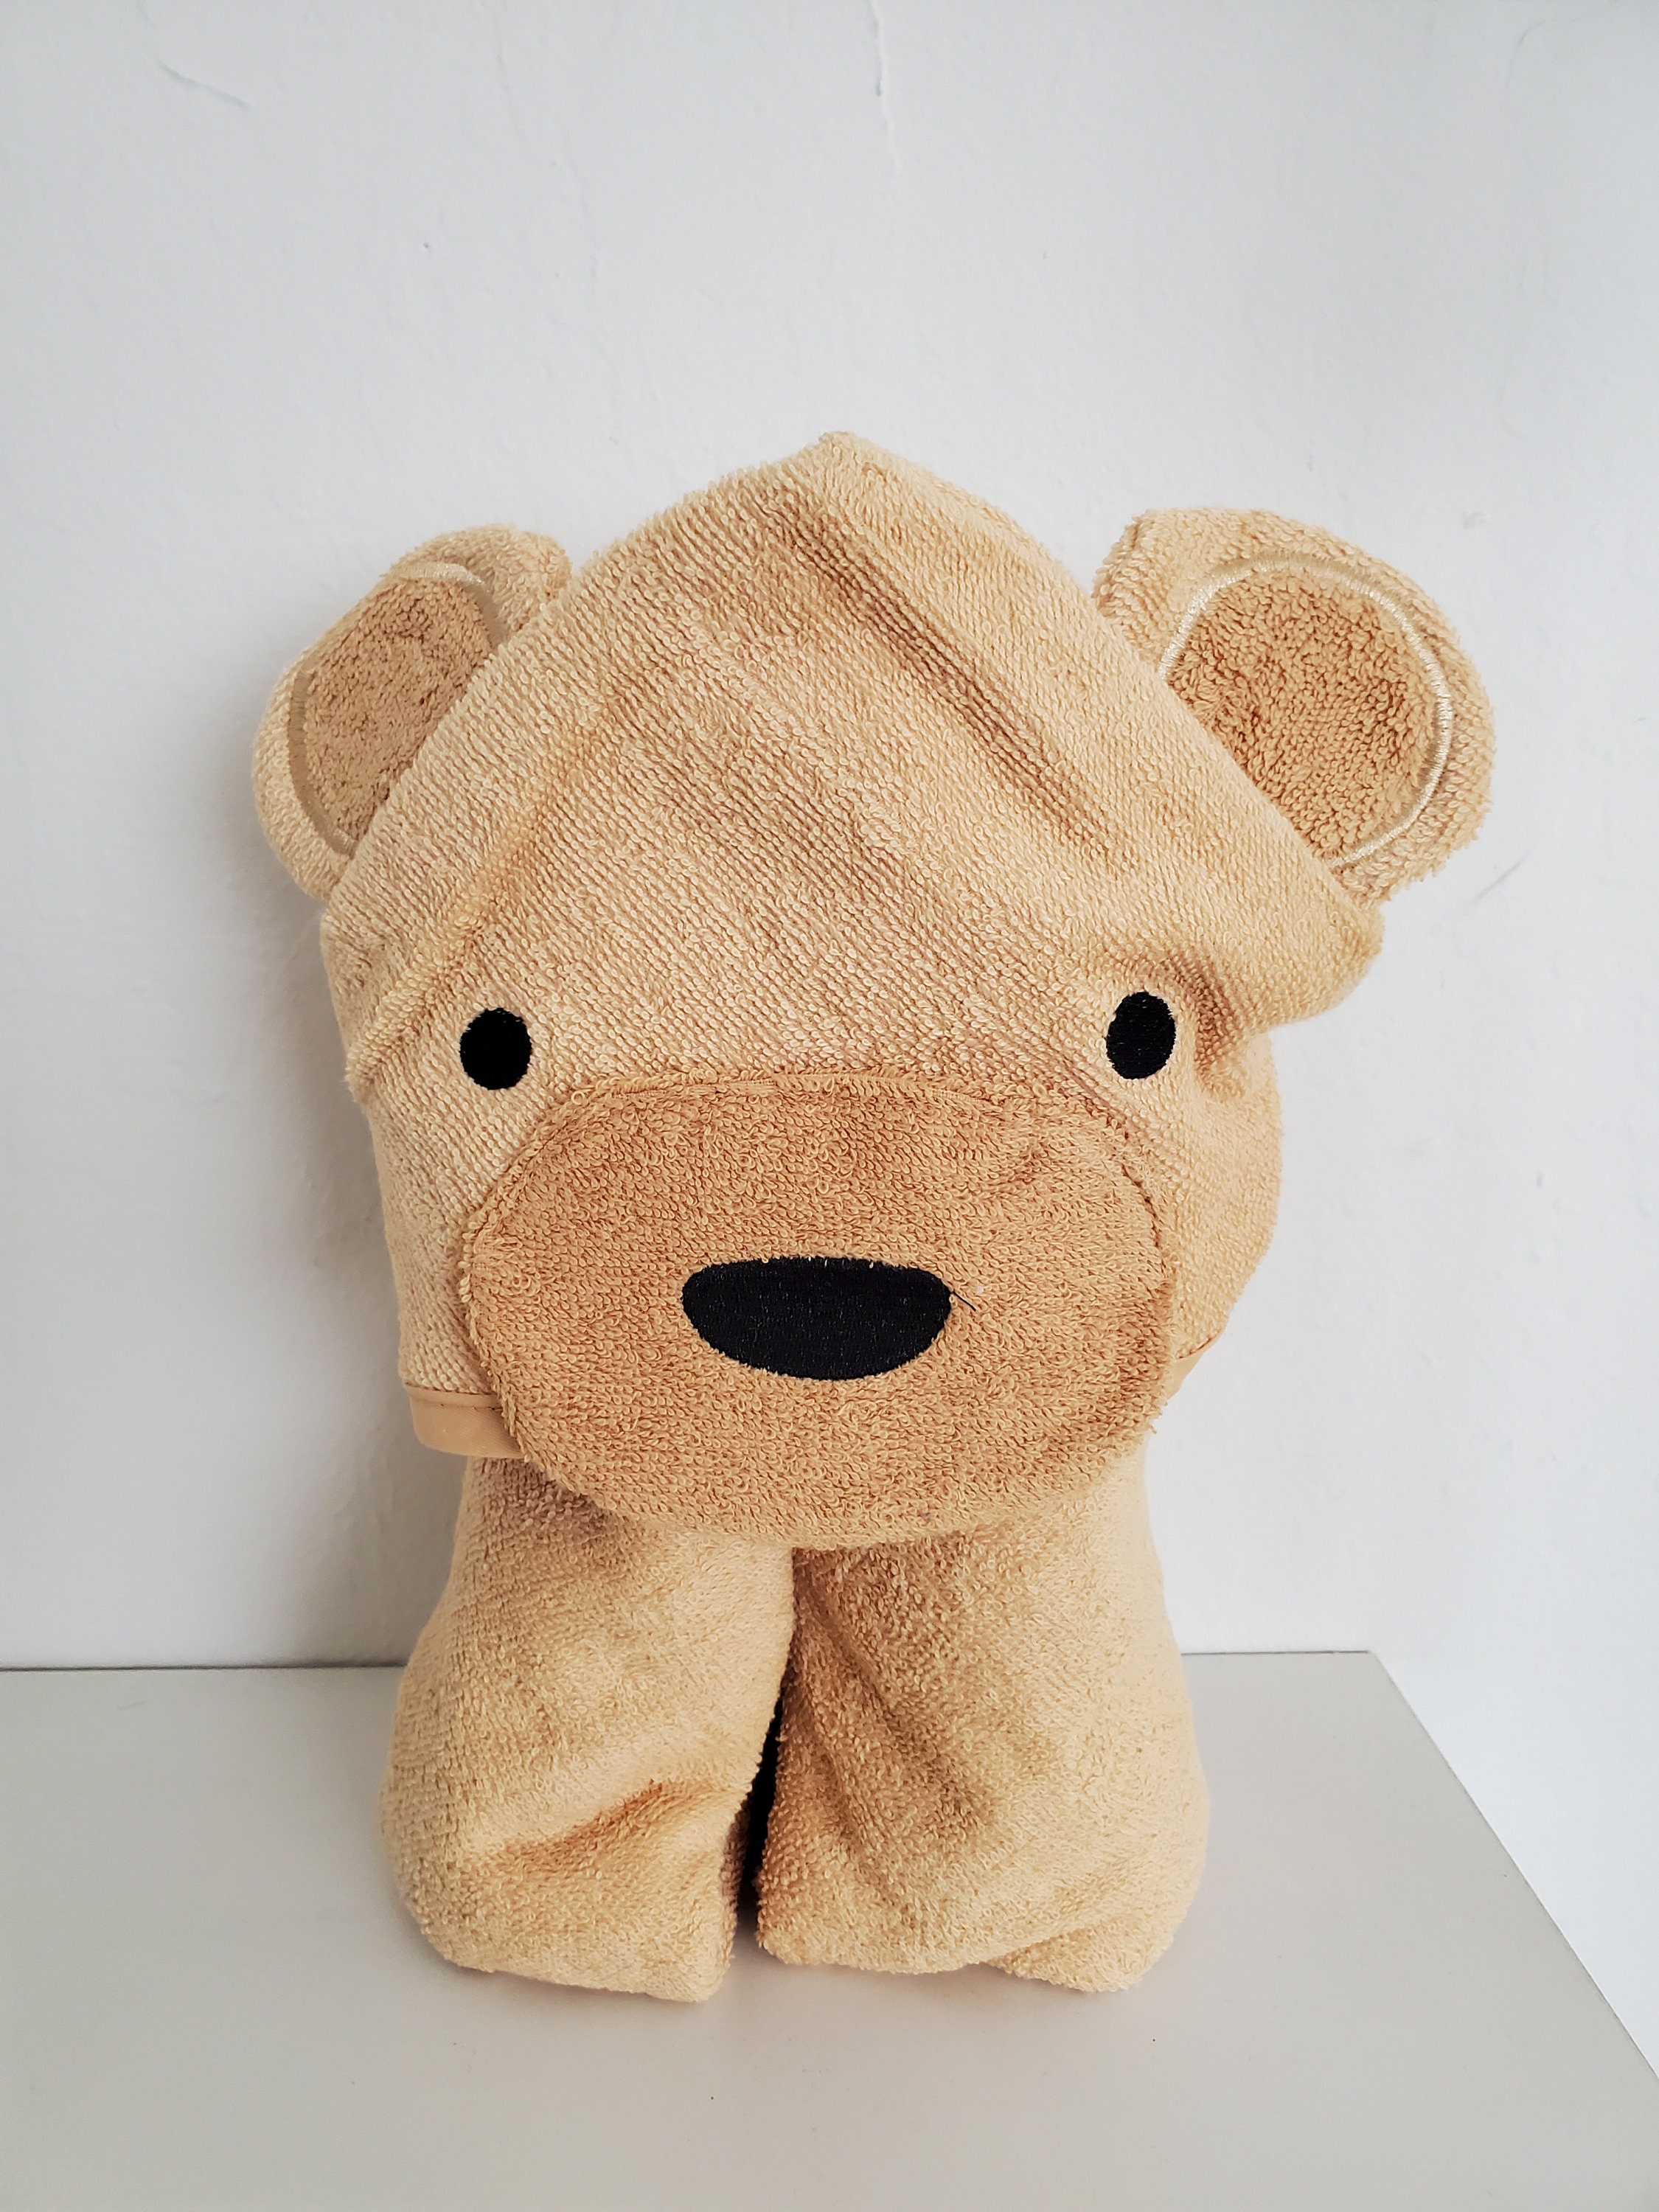  Yancos Teddy Bear Plush Figure Doll Toy Brown Stuffed Animal  Teddy Bear Plushies Home Decor Gift for Kids 9” : Toys & Games